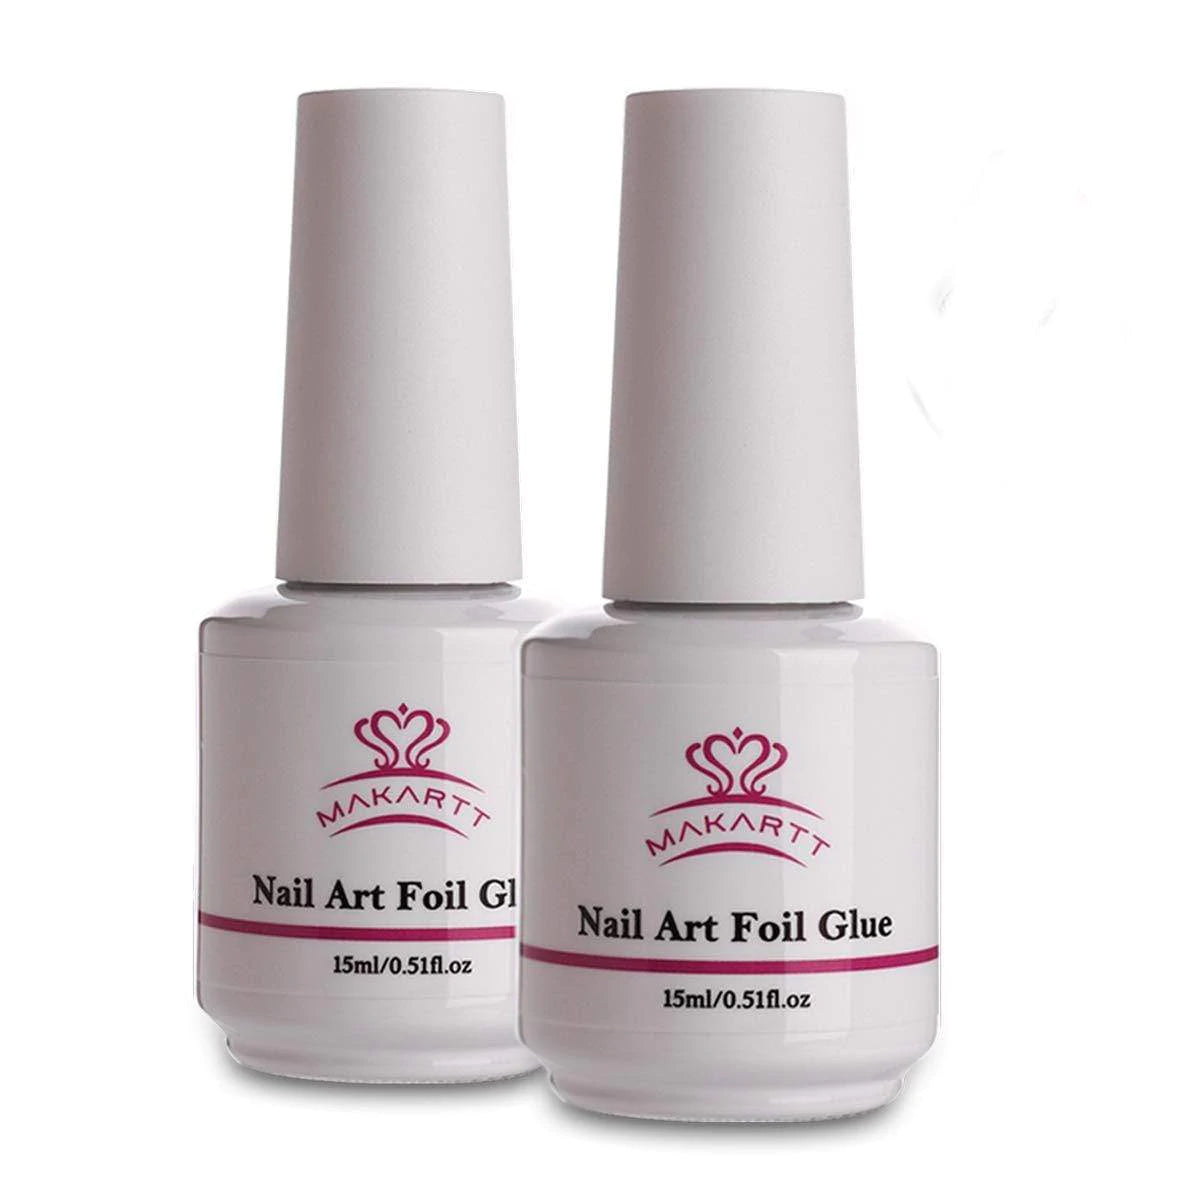 Nail Art Foil Transfer Glues (15ml)